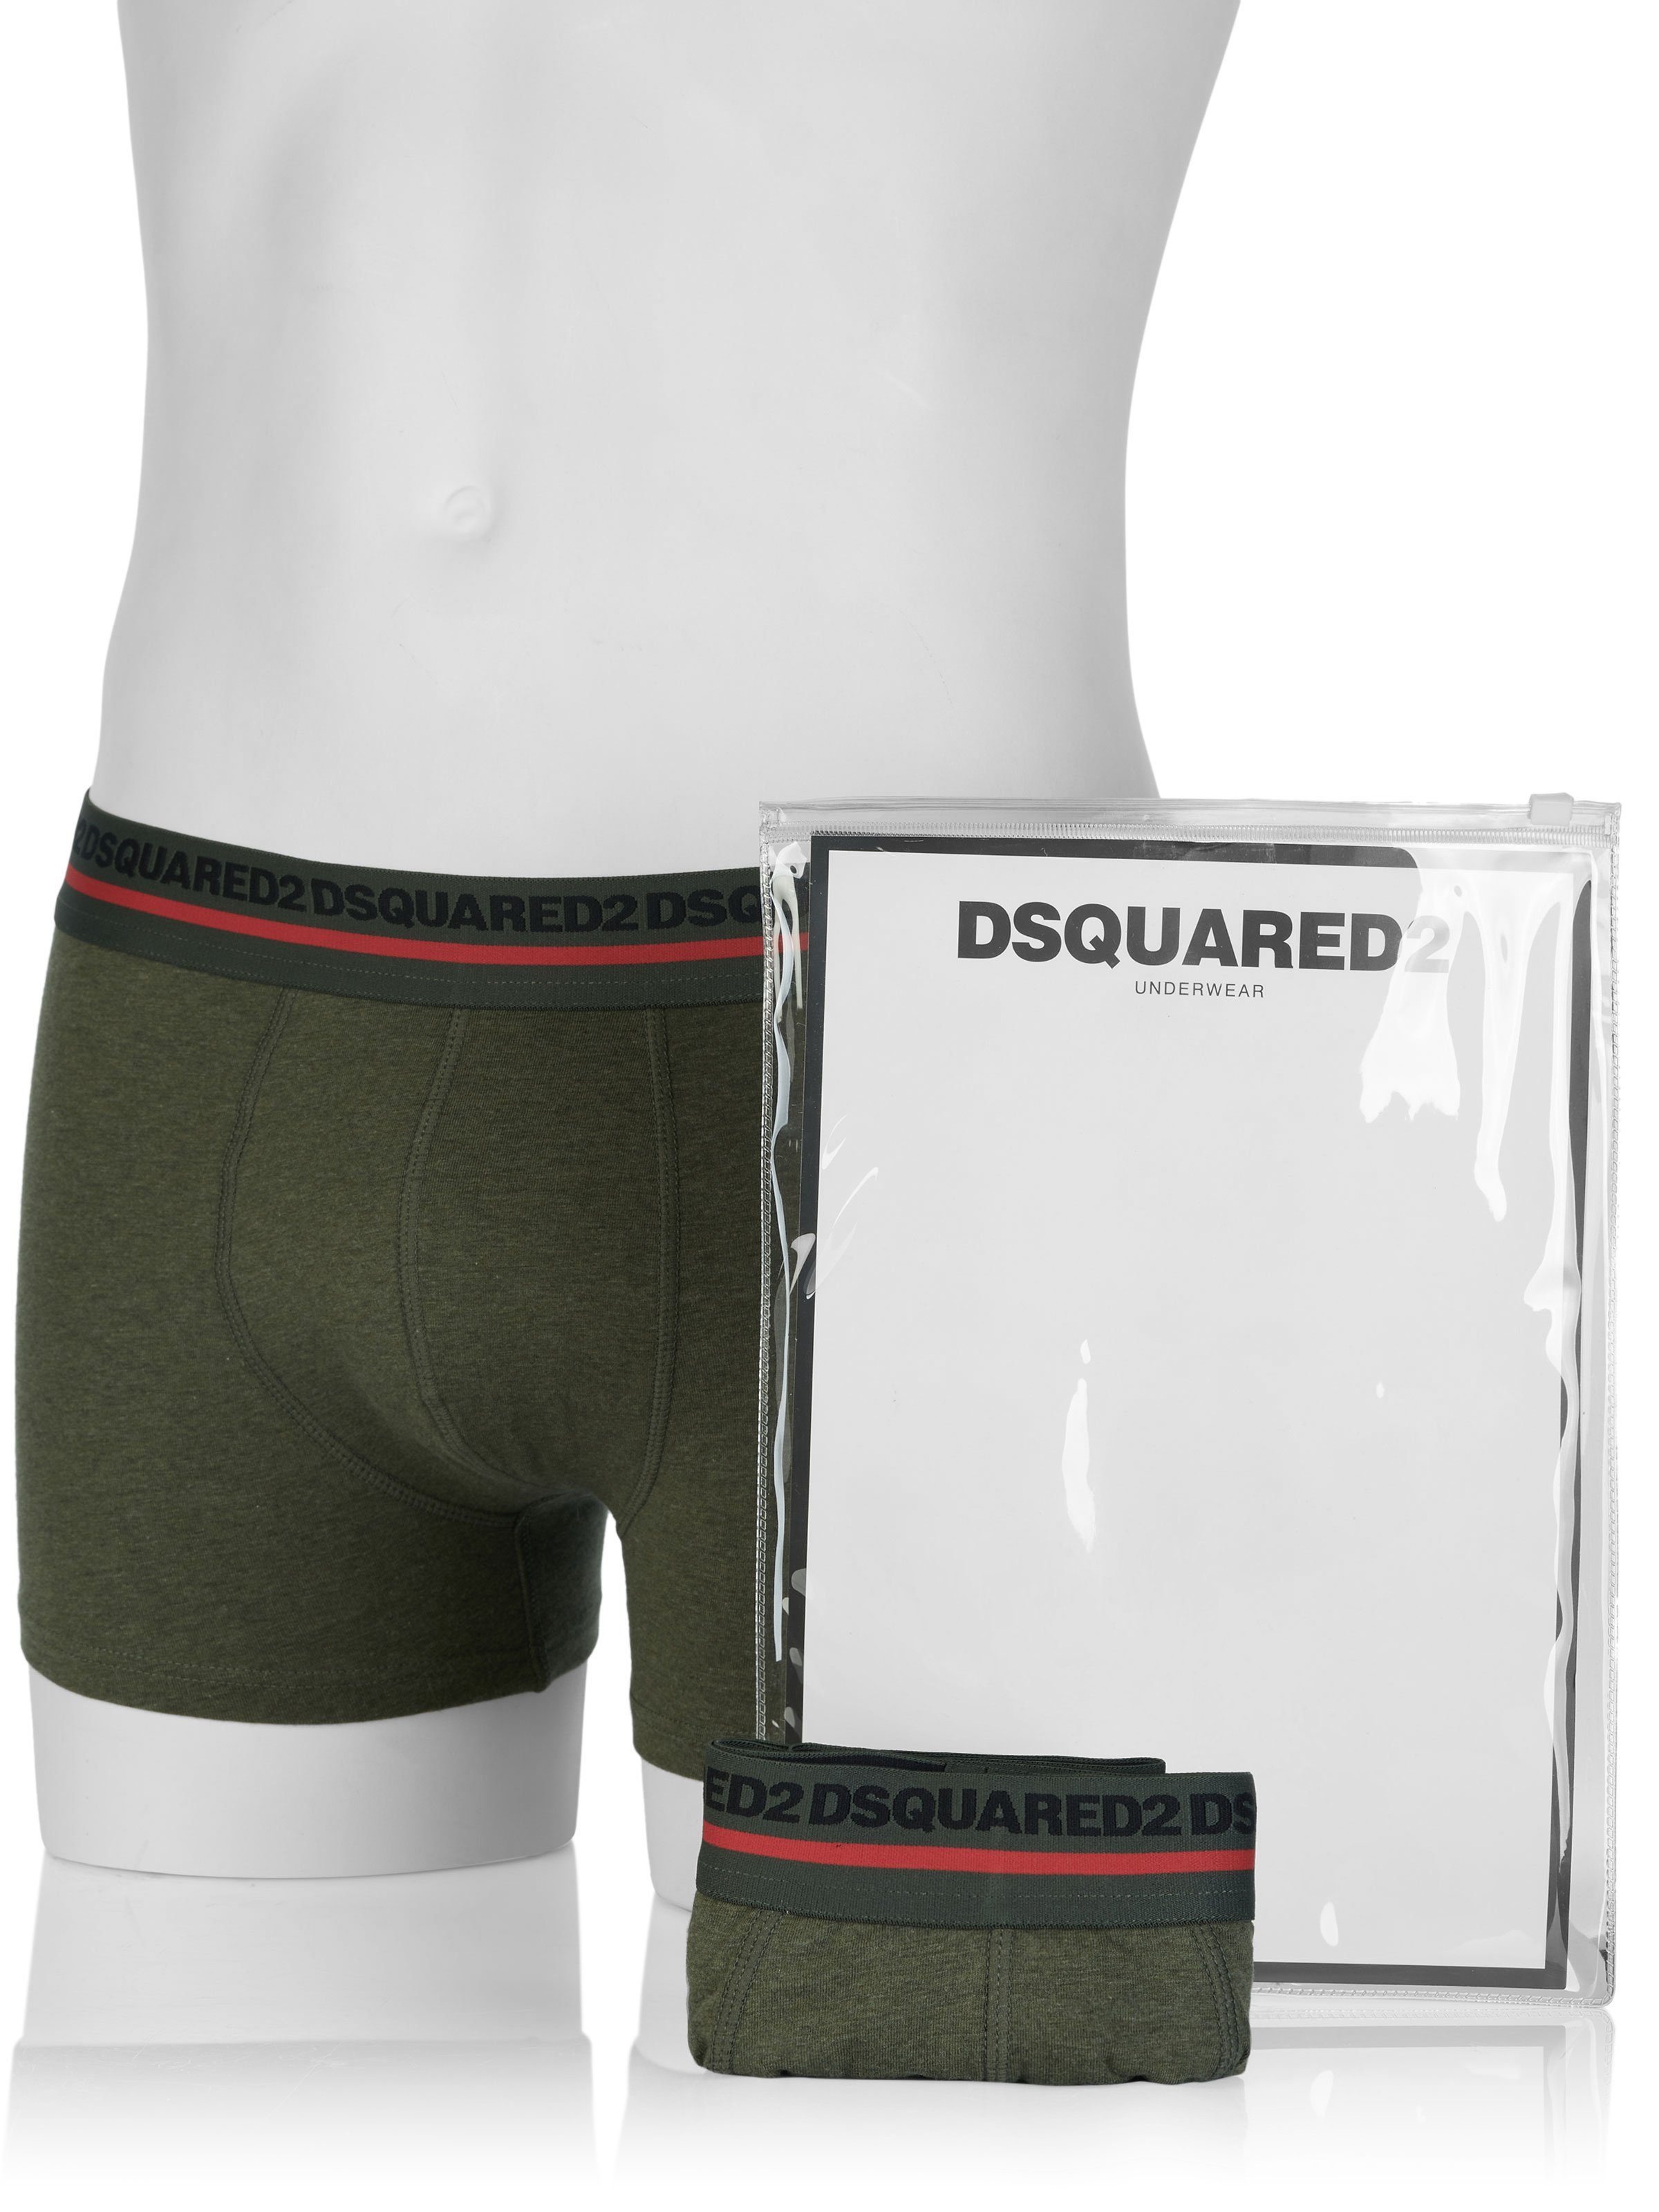 Dsquared2 Боксерские мужские трусы, боксерки Dsquared2 Underwear Zweierpack Khaki